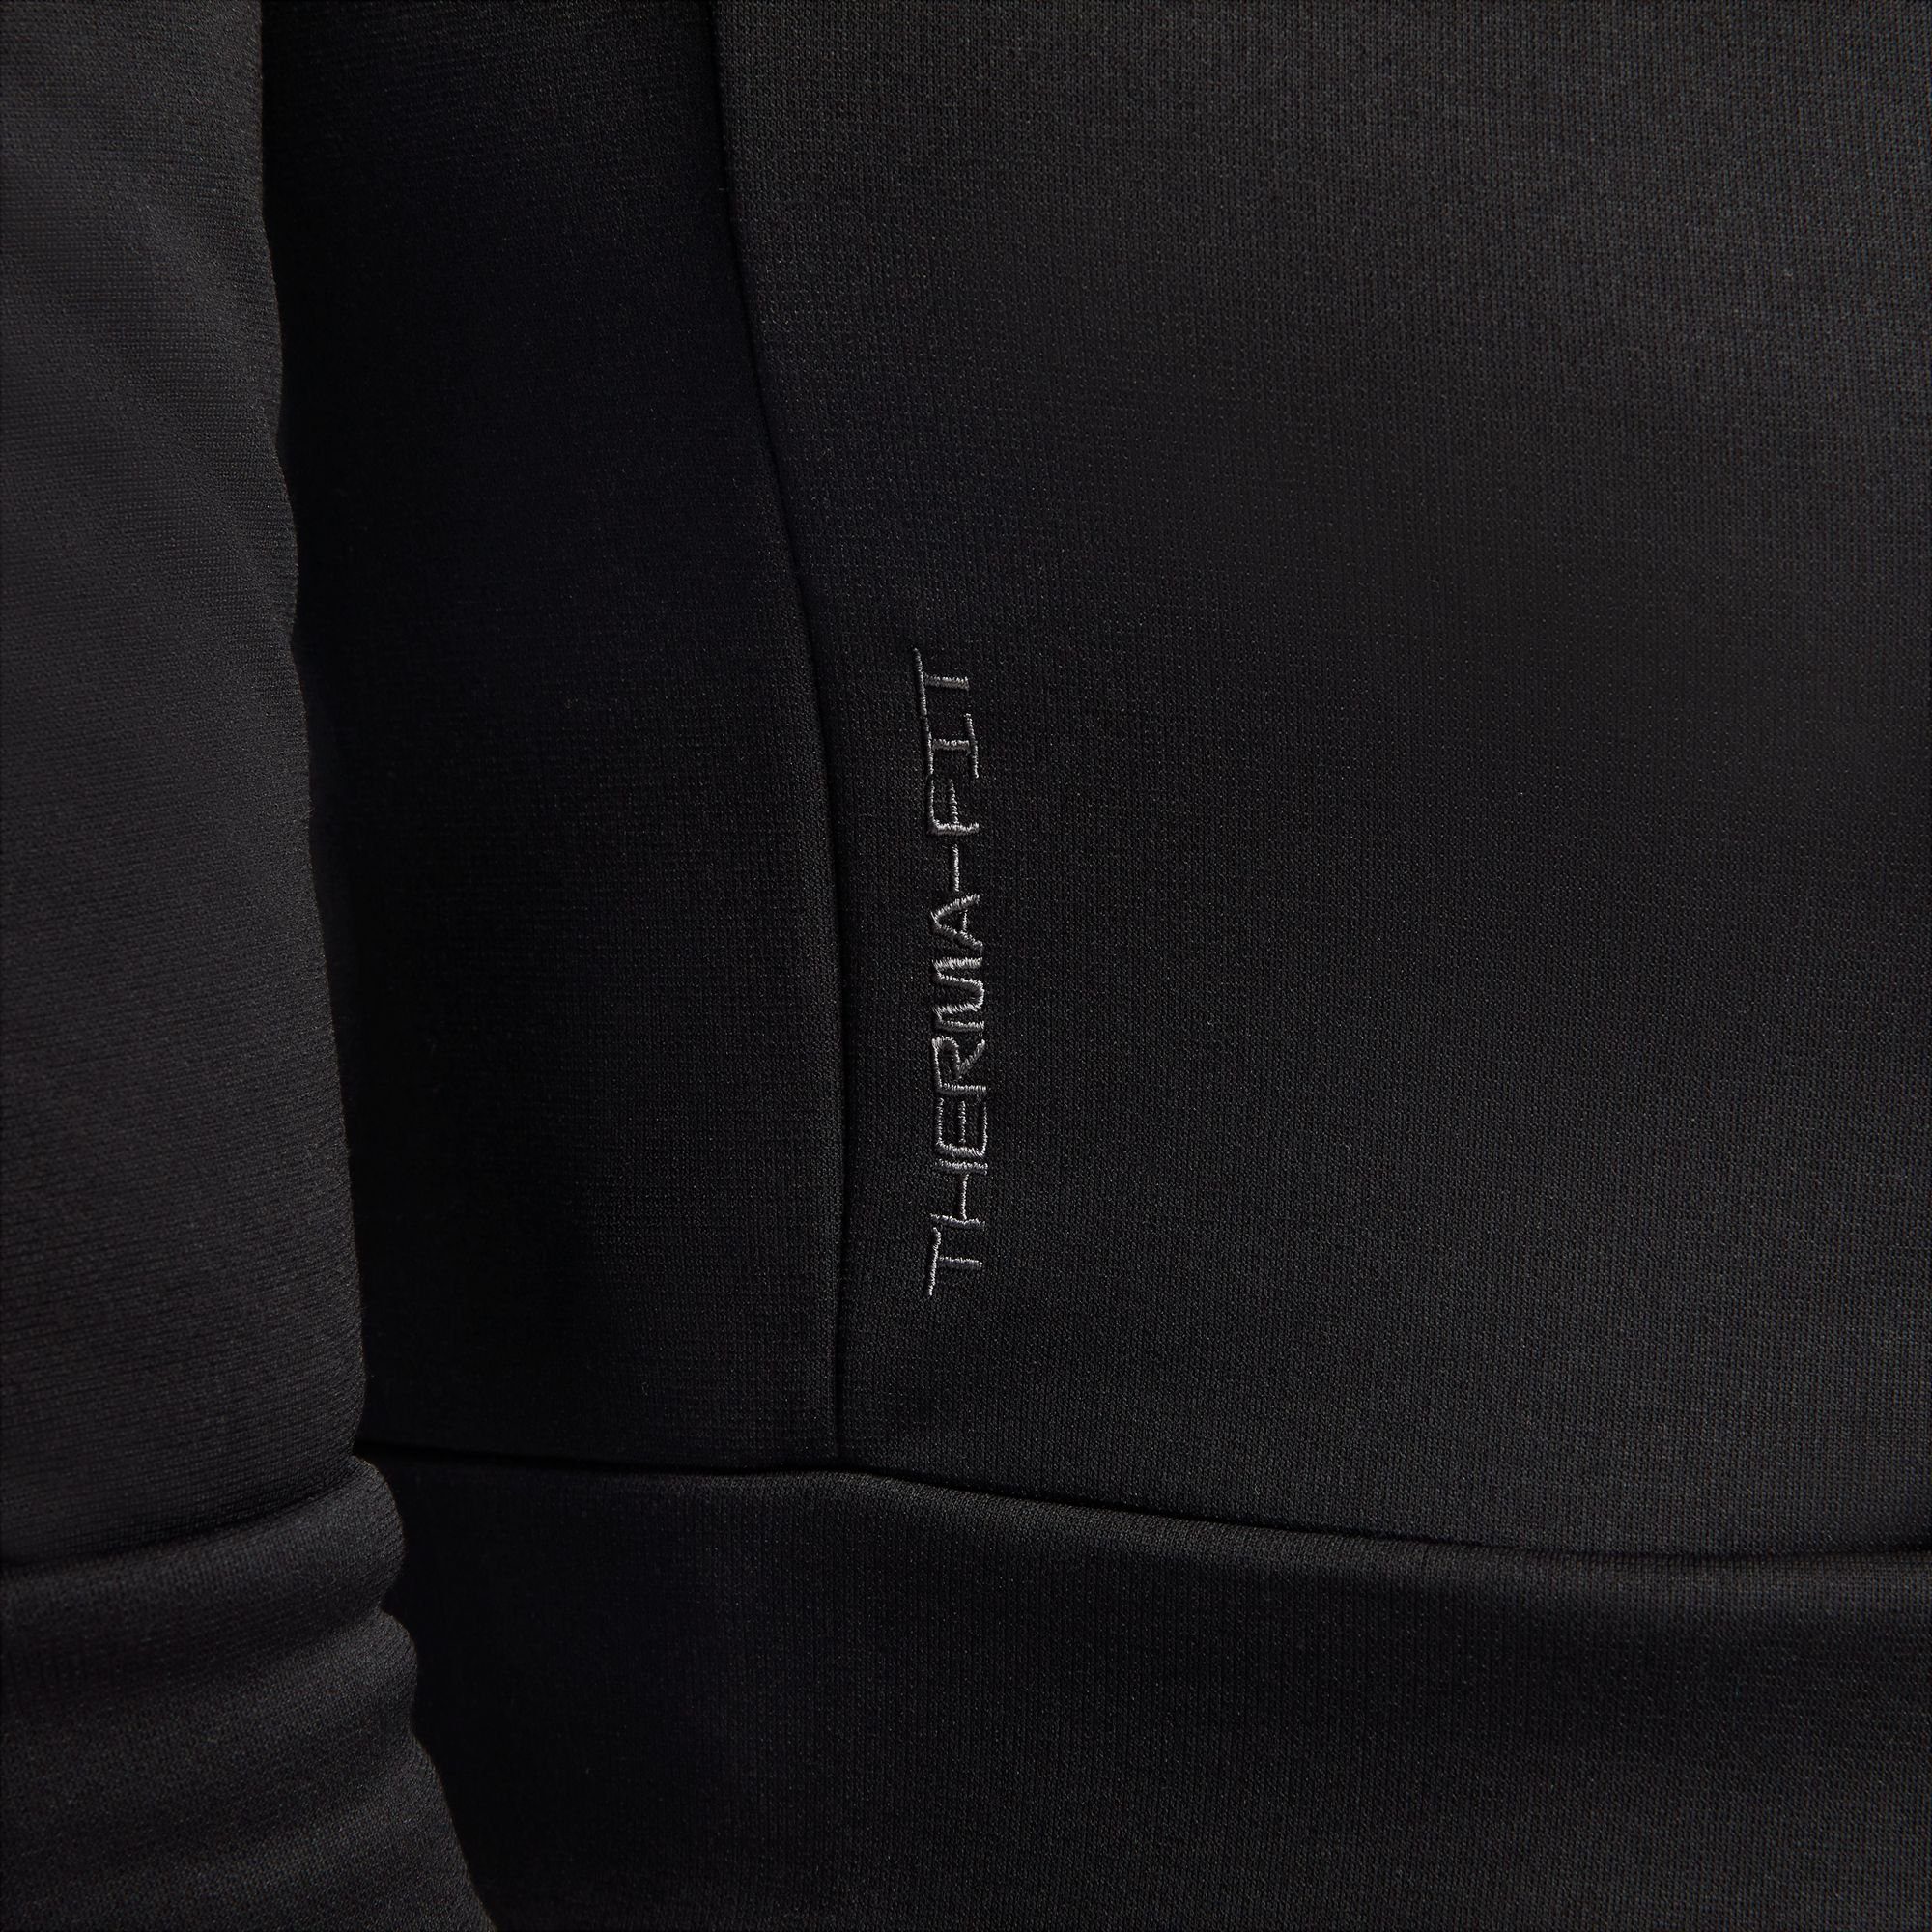 FITNESS Nike Kapuzensweatshirt HOODIE THERMA-FIT MEN'S BLACK/BLACK/WHITE PULLOVER